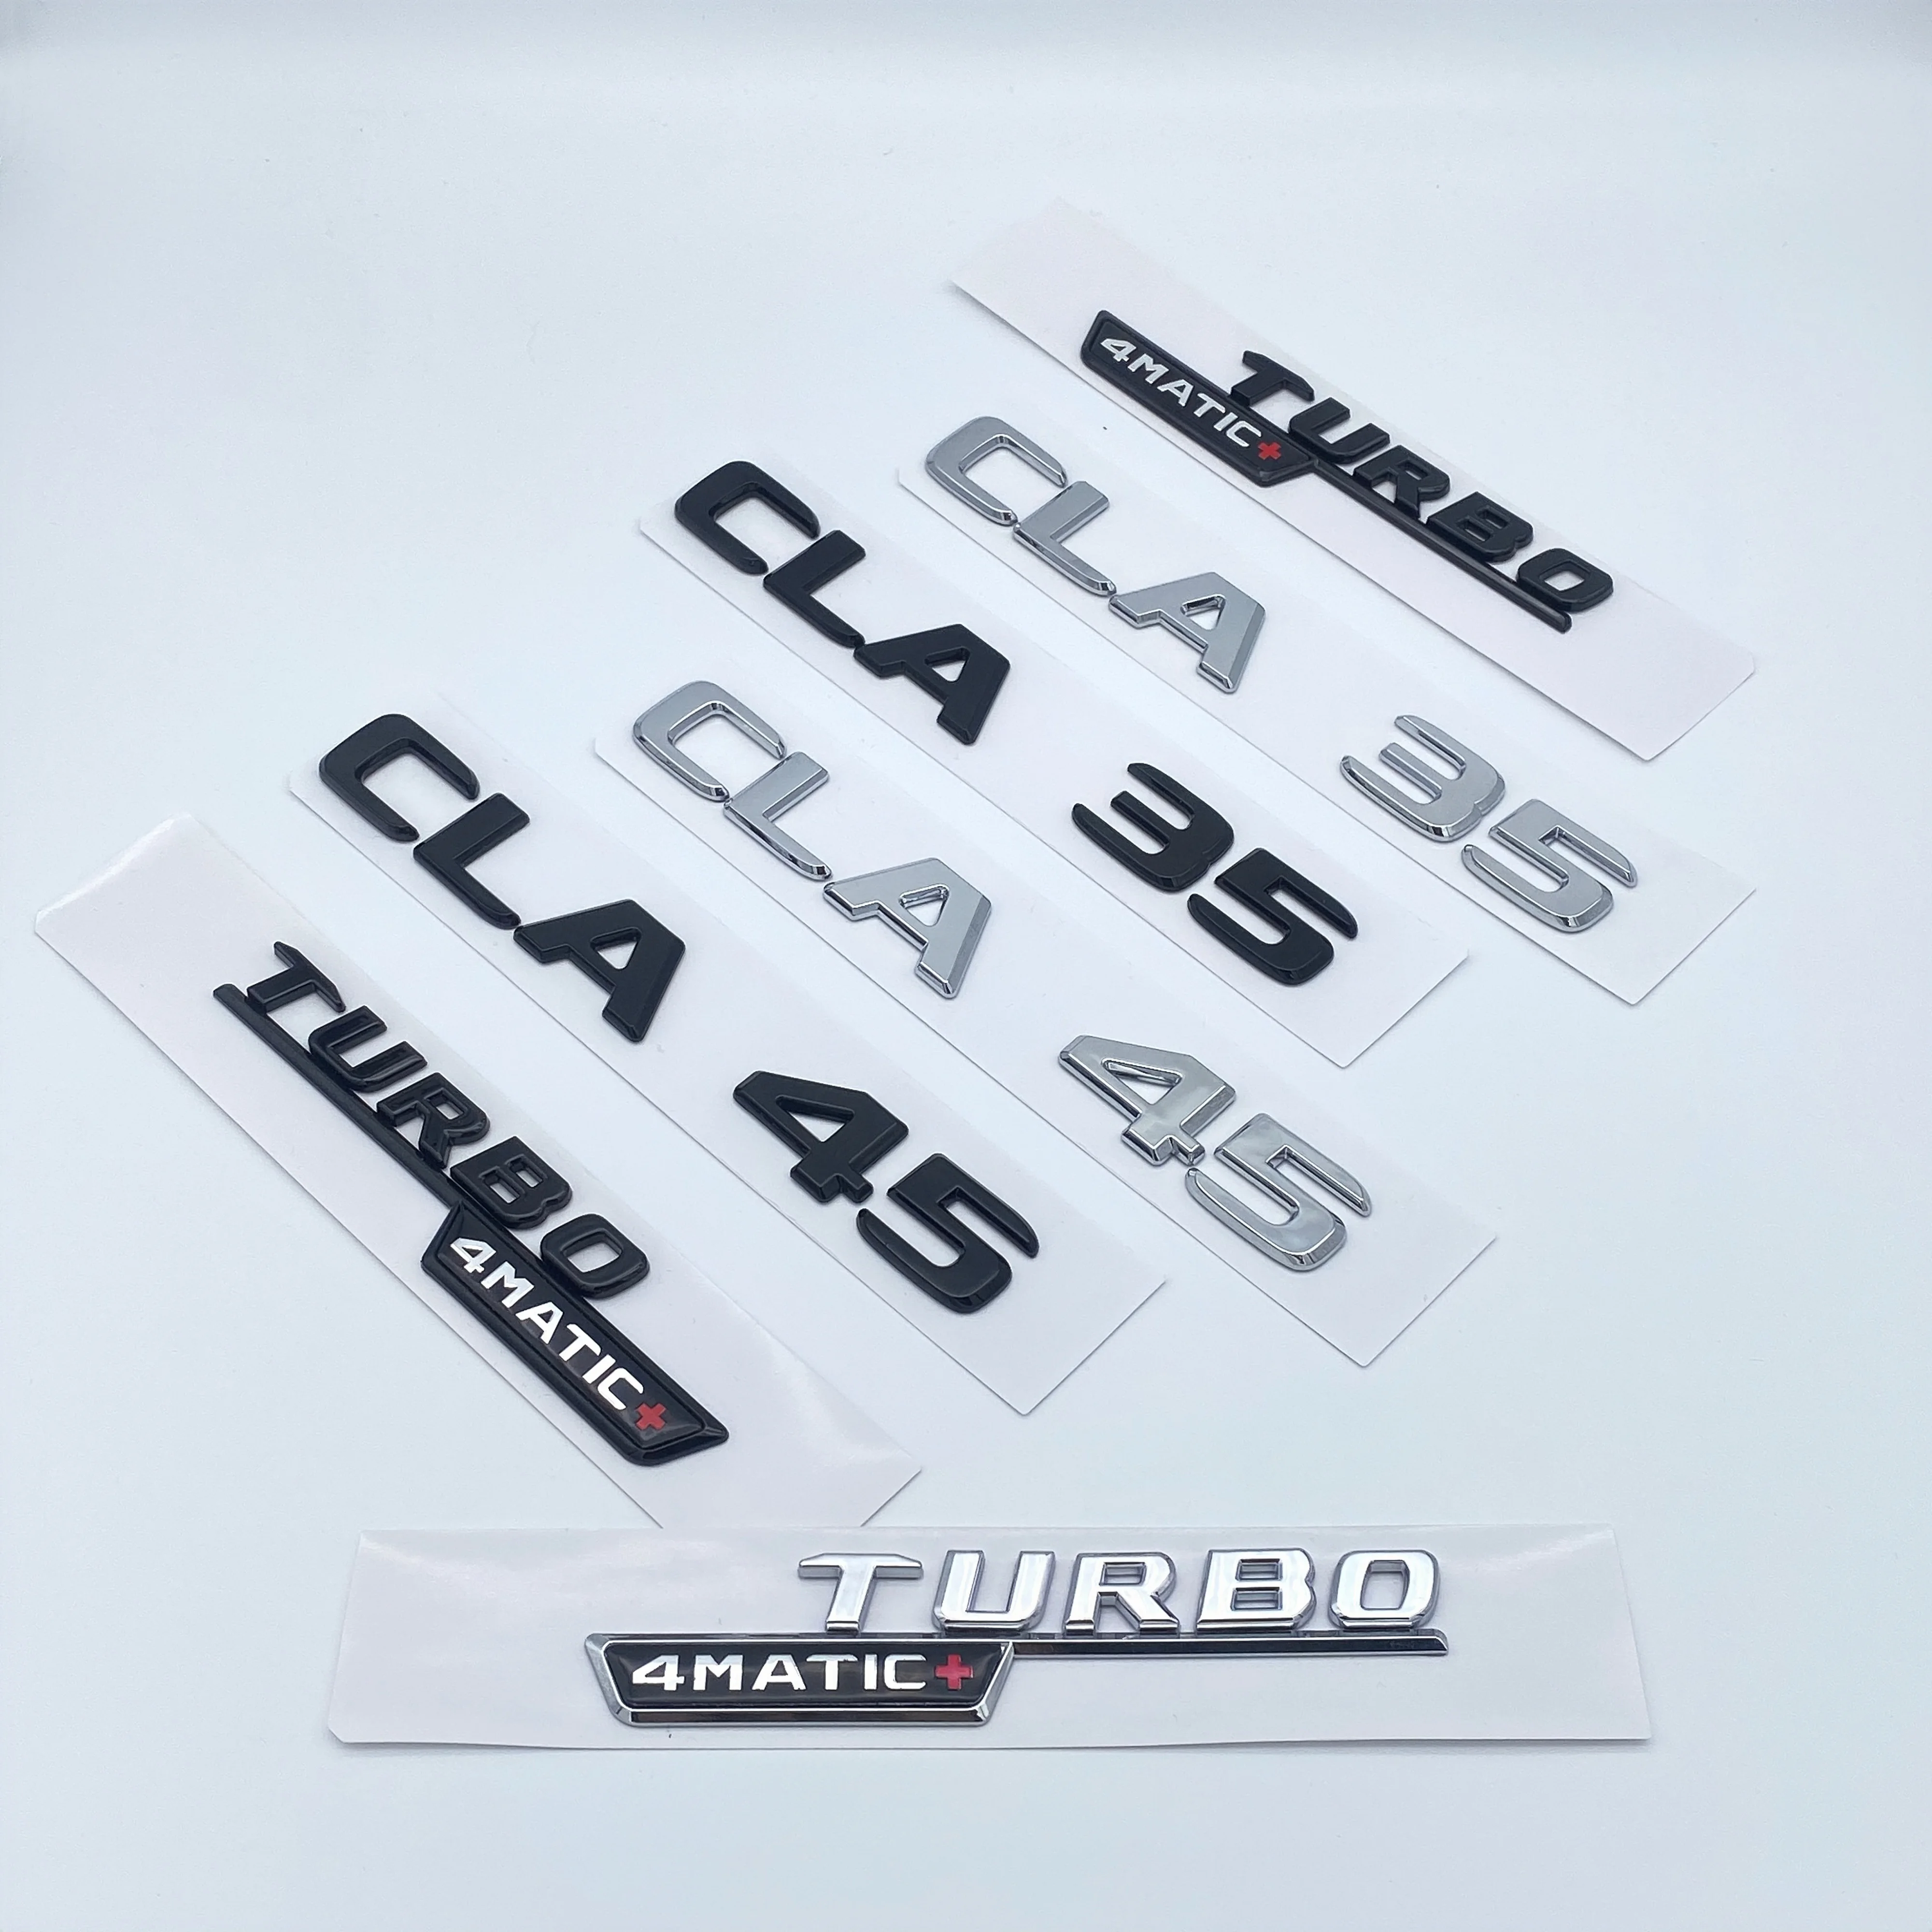 

3D ABS Black Silver Letters CLA35 CLA45 Turbo 4matic+ Emblem for Mercedes Benz AMG Car Fender Trunk Rear C118 W117 Logo Sticker